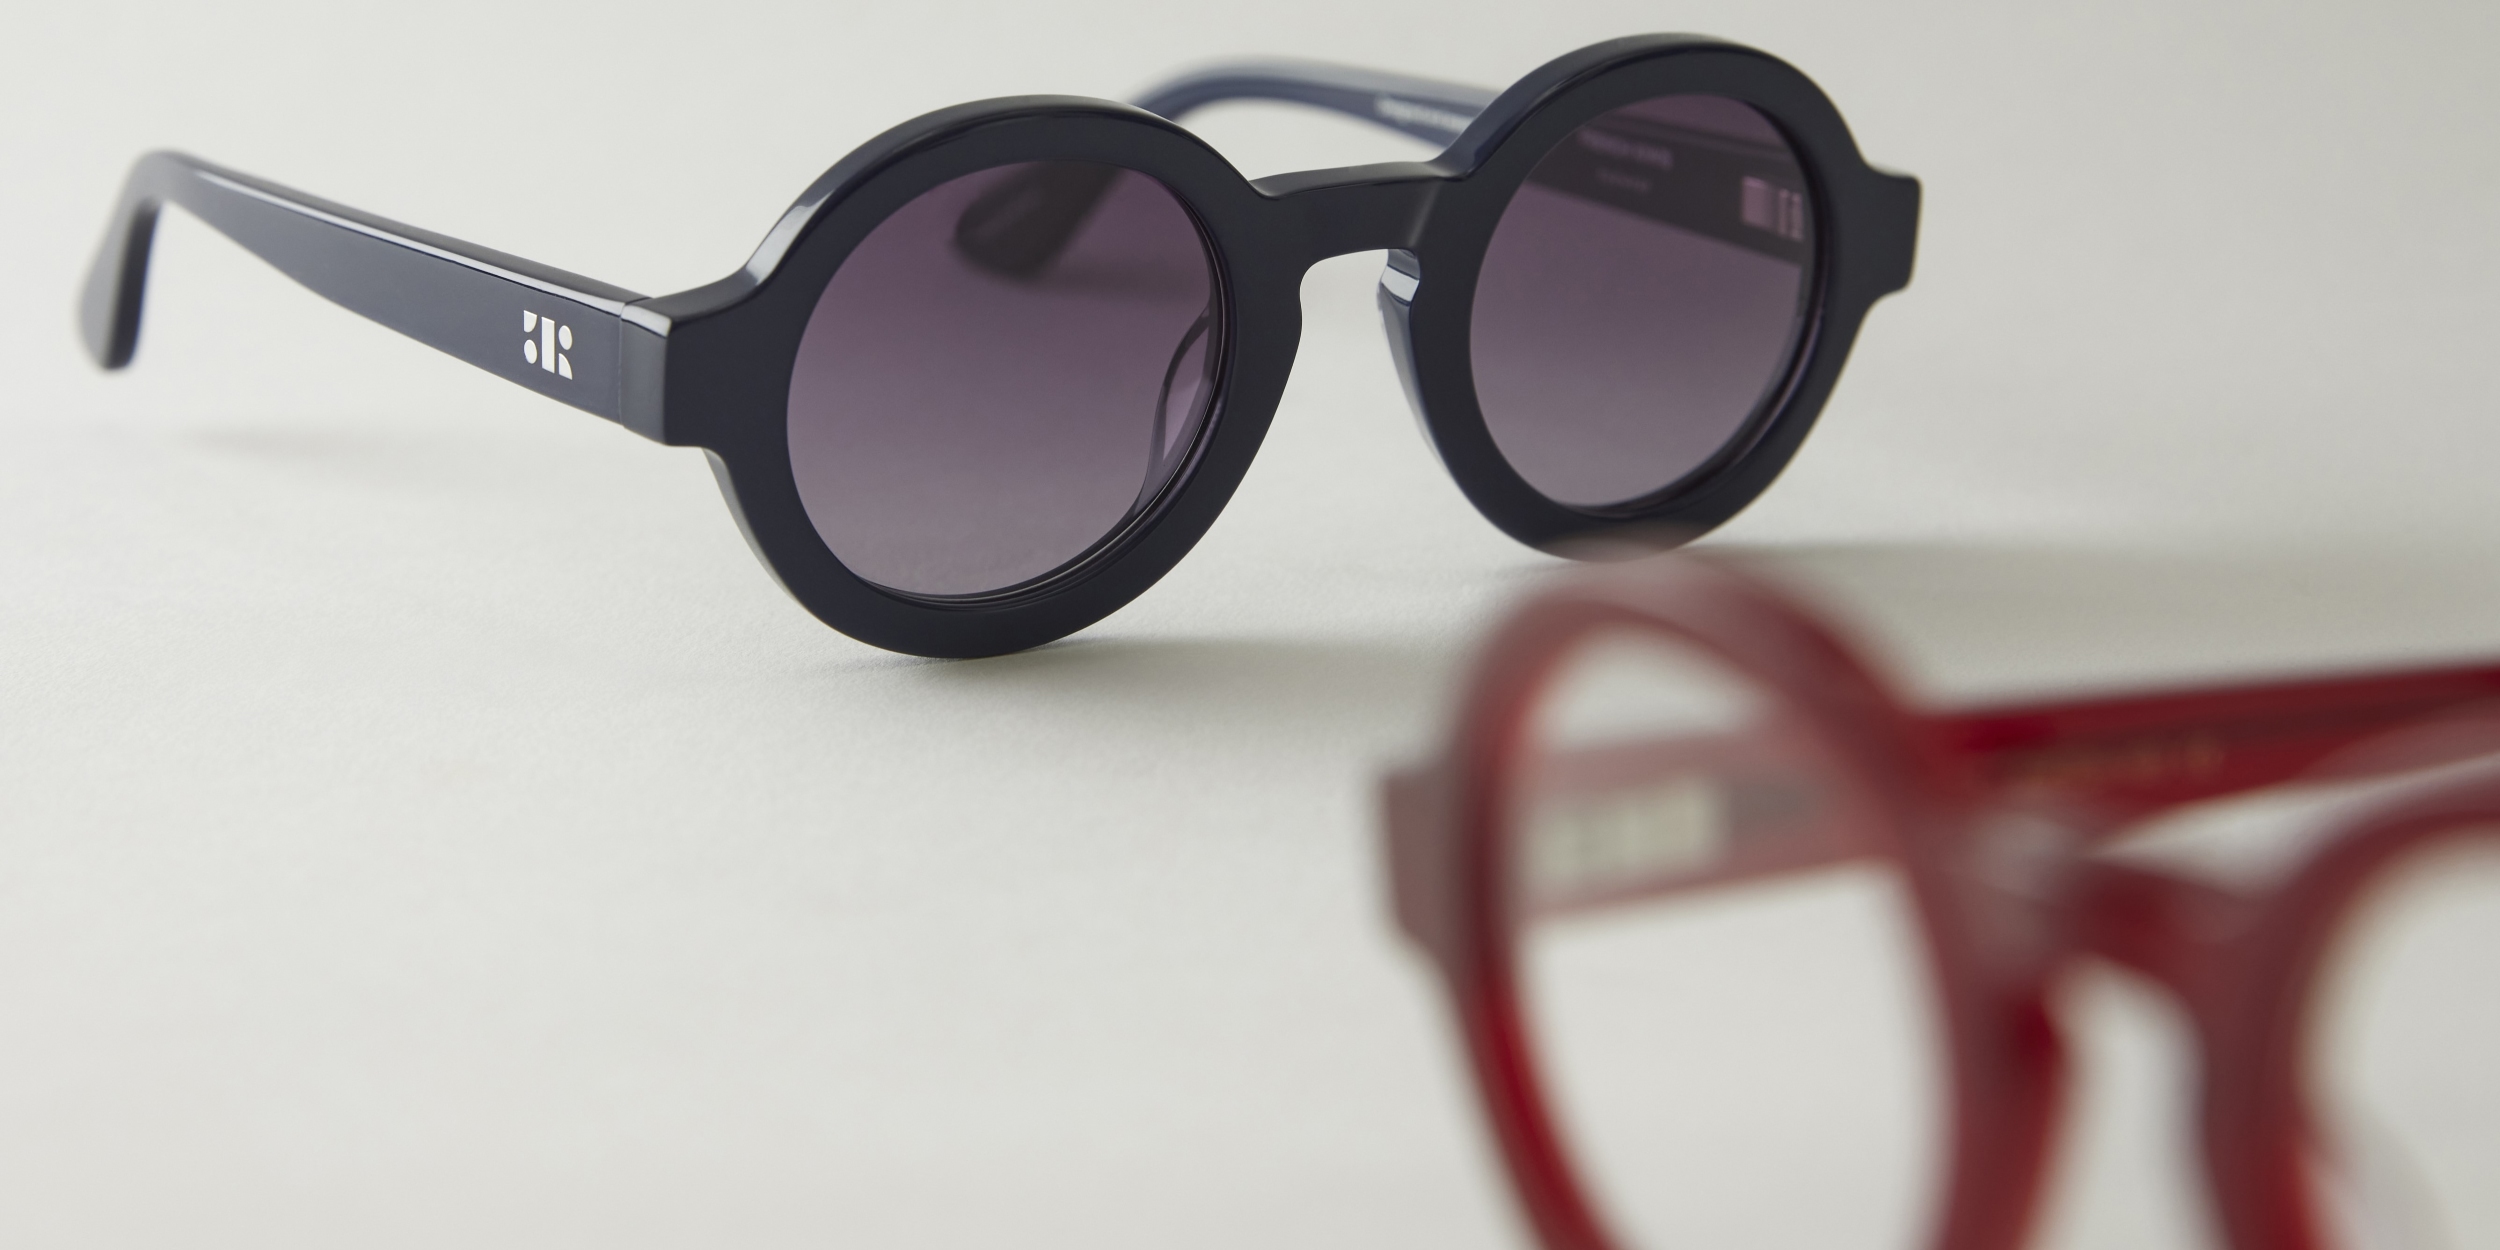 Photo Details of Lola Sun Black Sun Glasses in a room